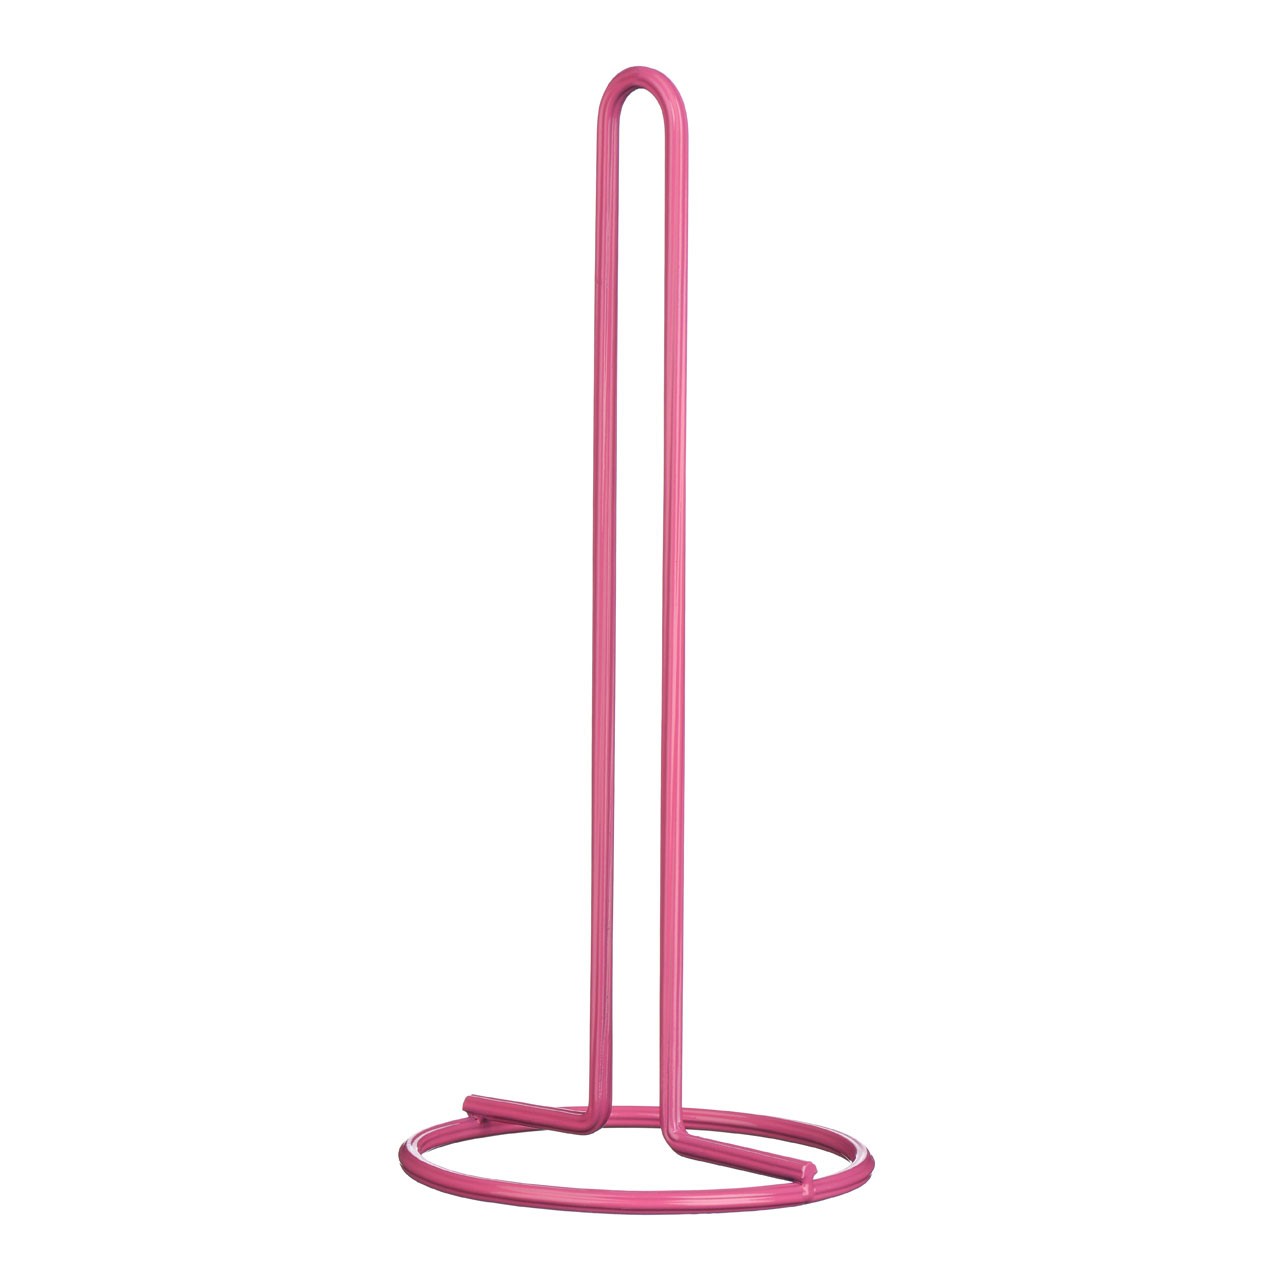 Helix Kitchen Roll Holder - Hot Pink